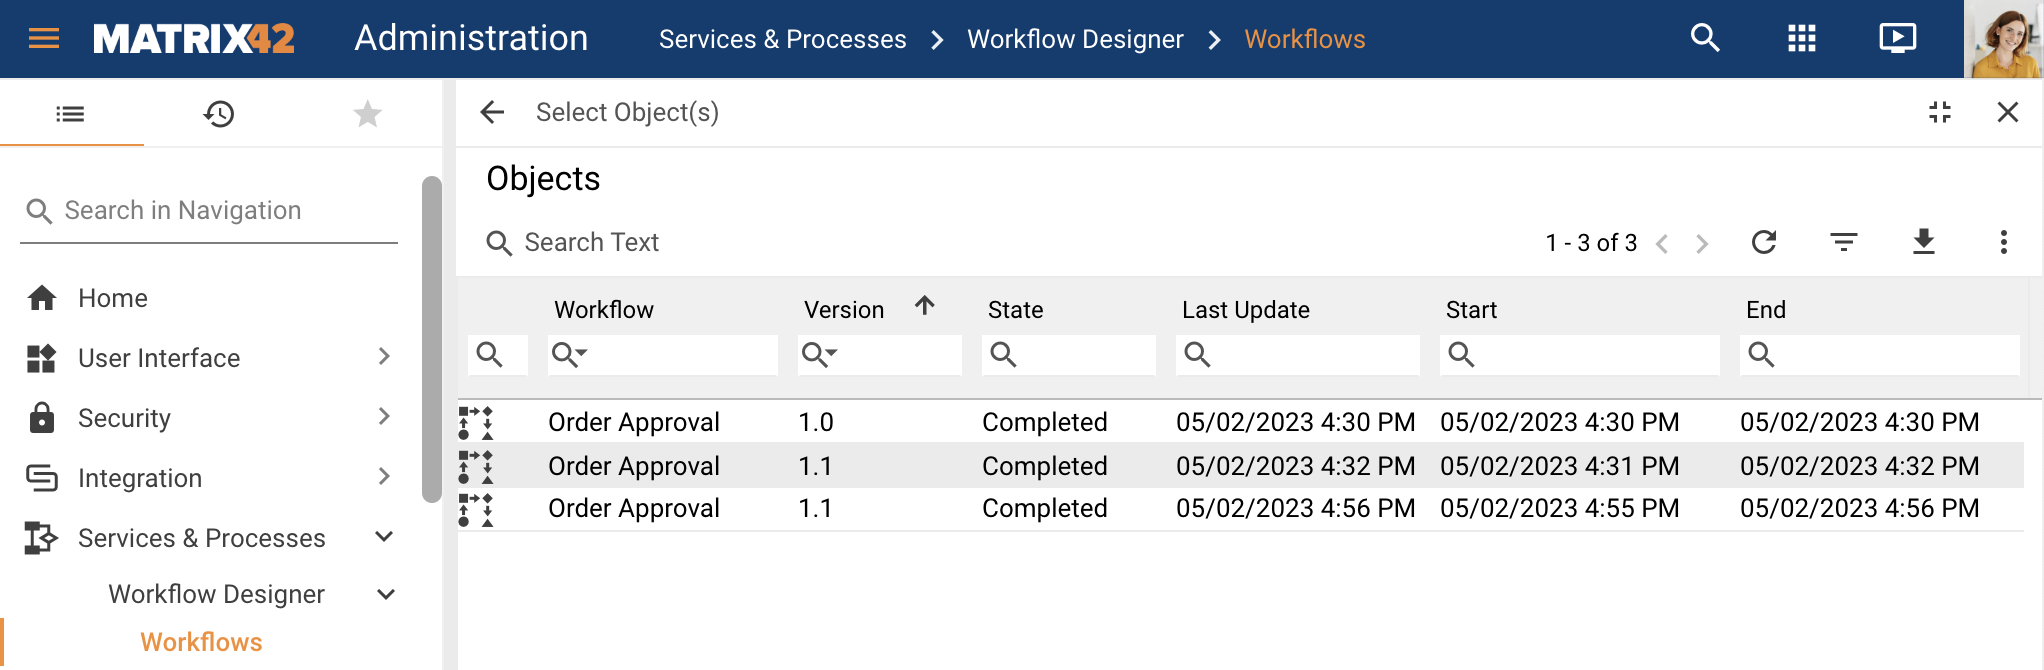 Workflow Instances Workflow Designer Workflow example.png